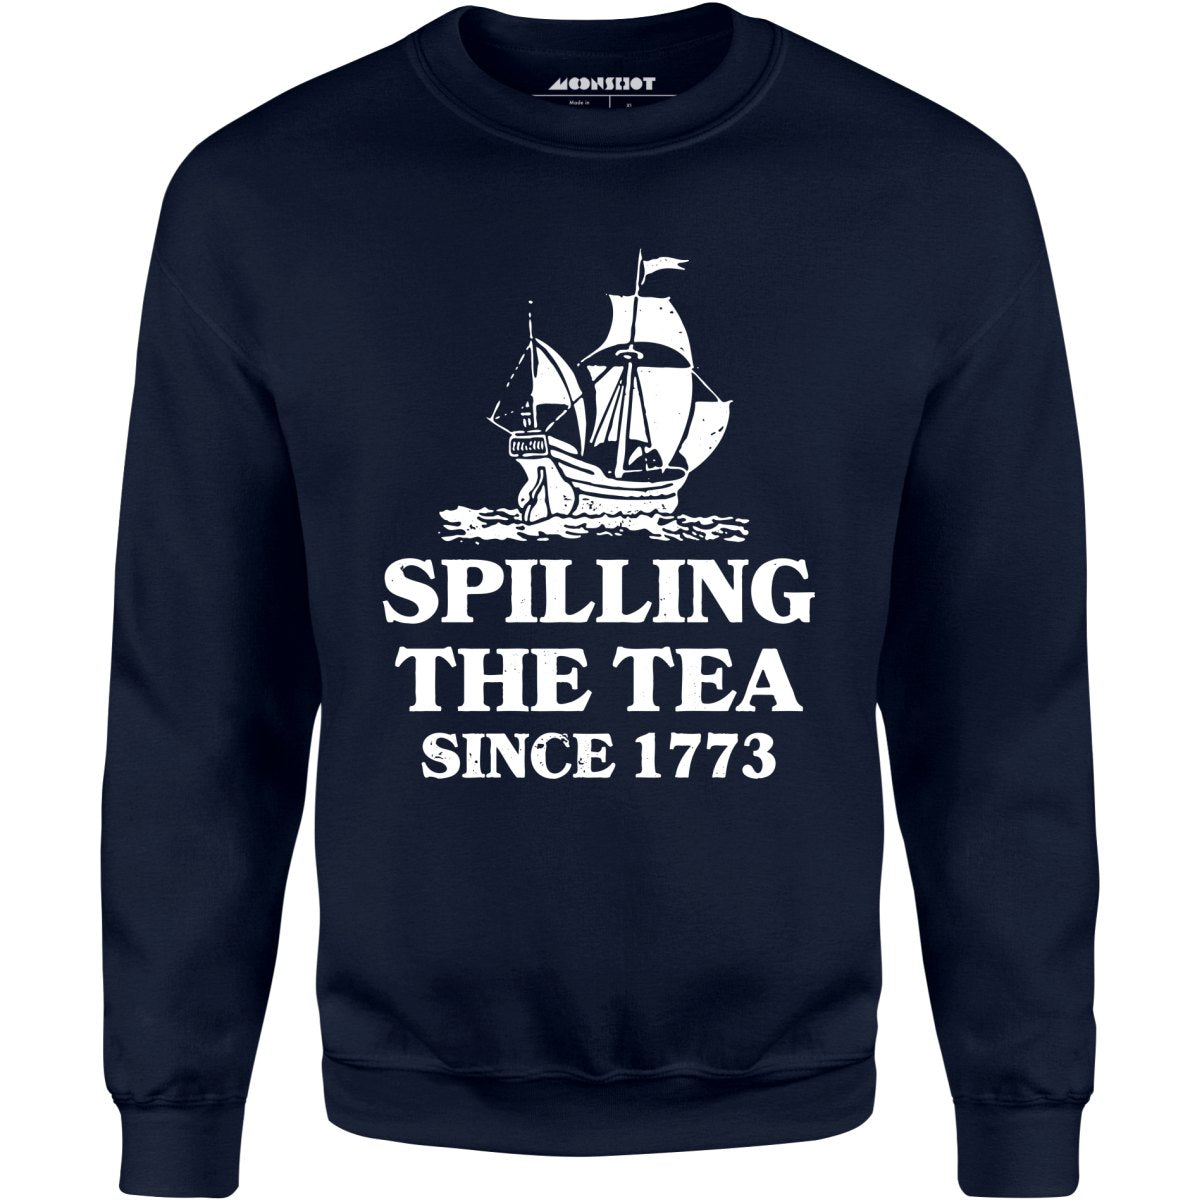 Spilling The Tea Since 1773 - Unisex Sweatshirt